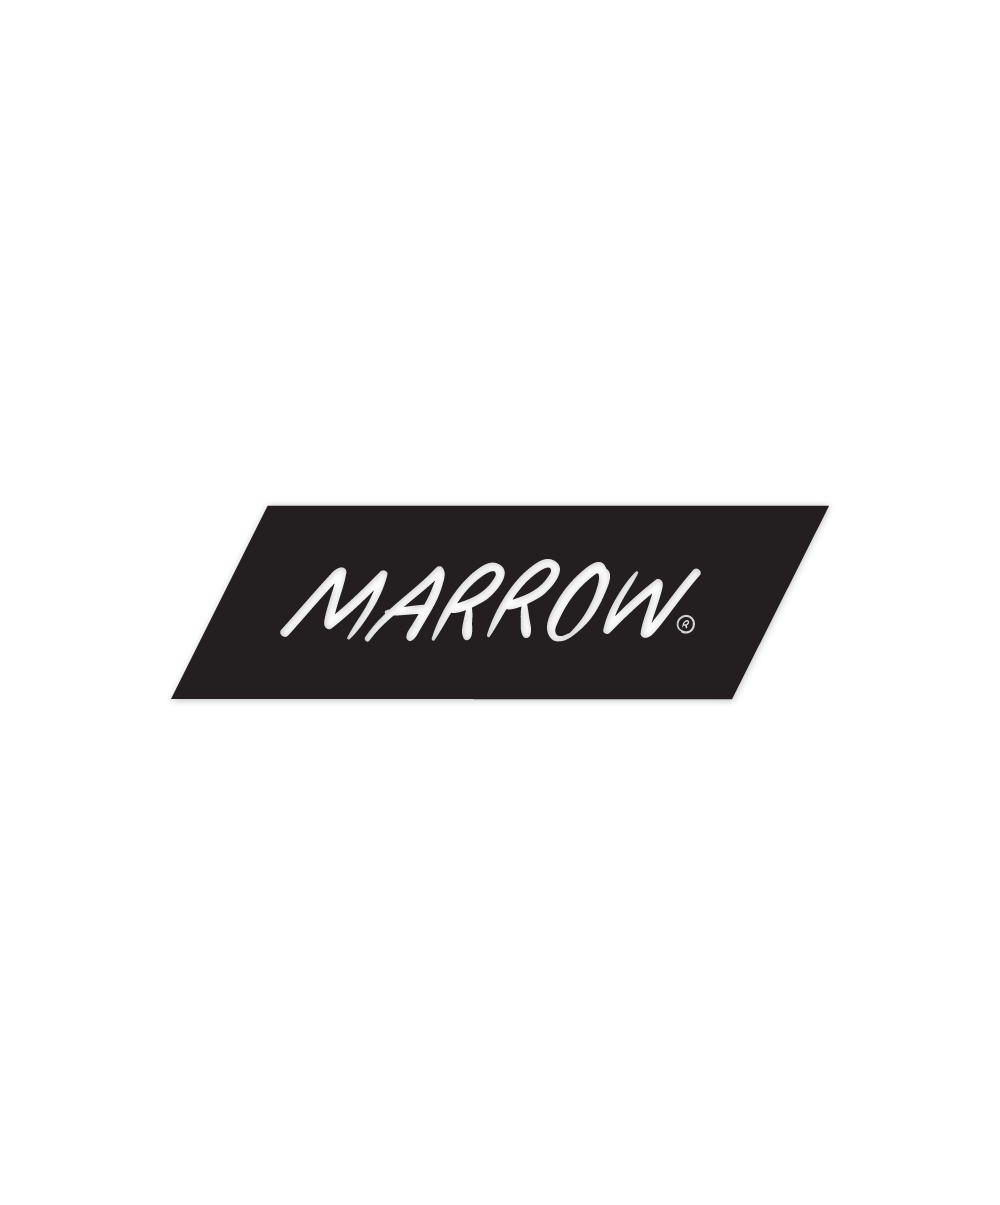 Marrow Parallel bite-size sticker